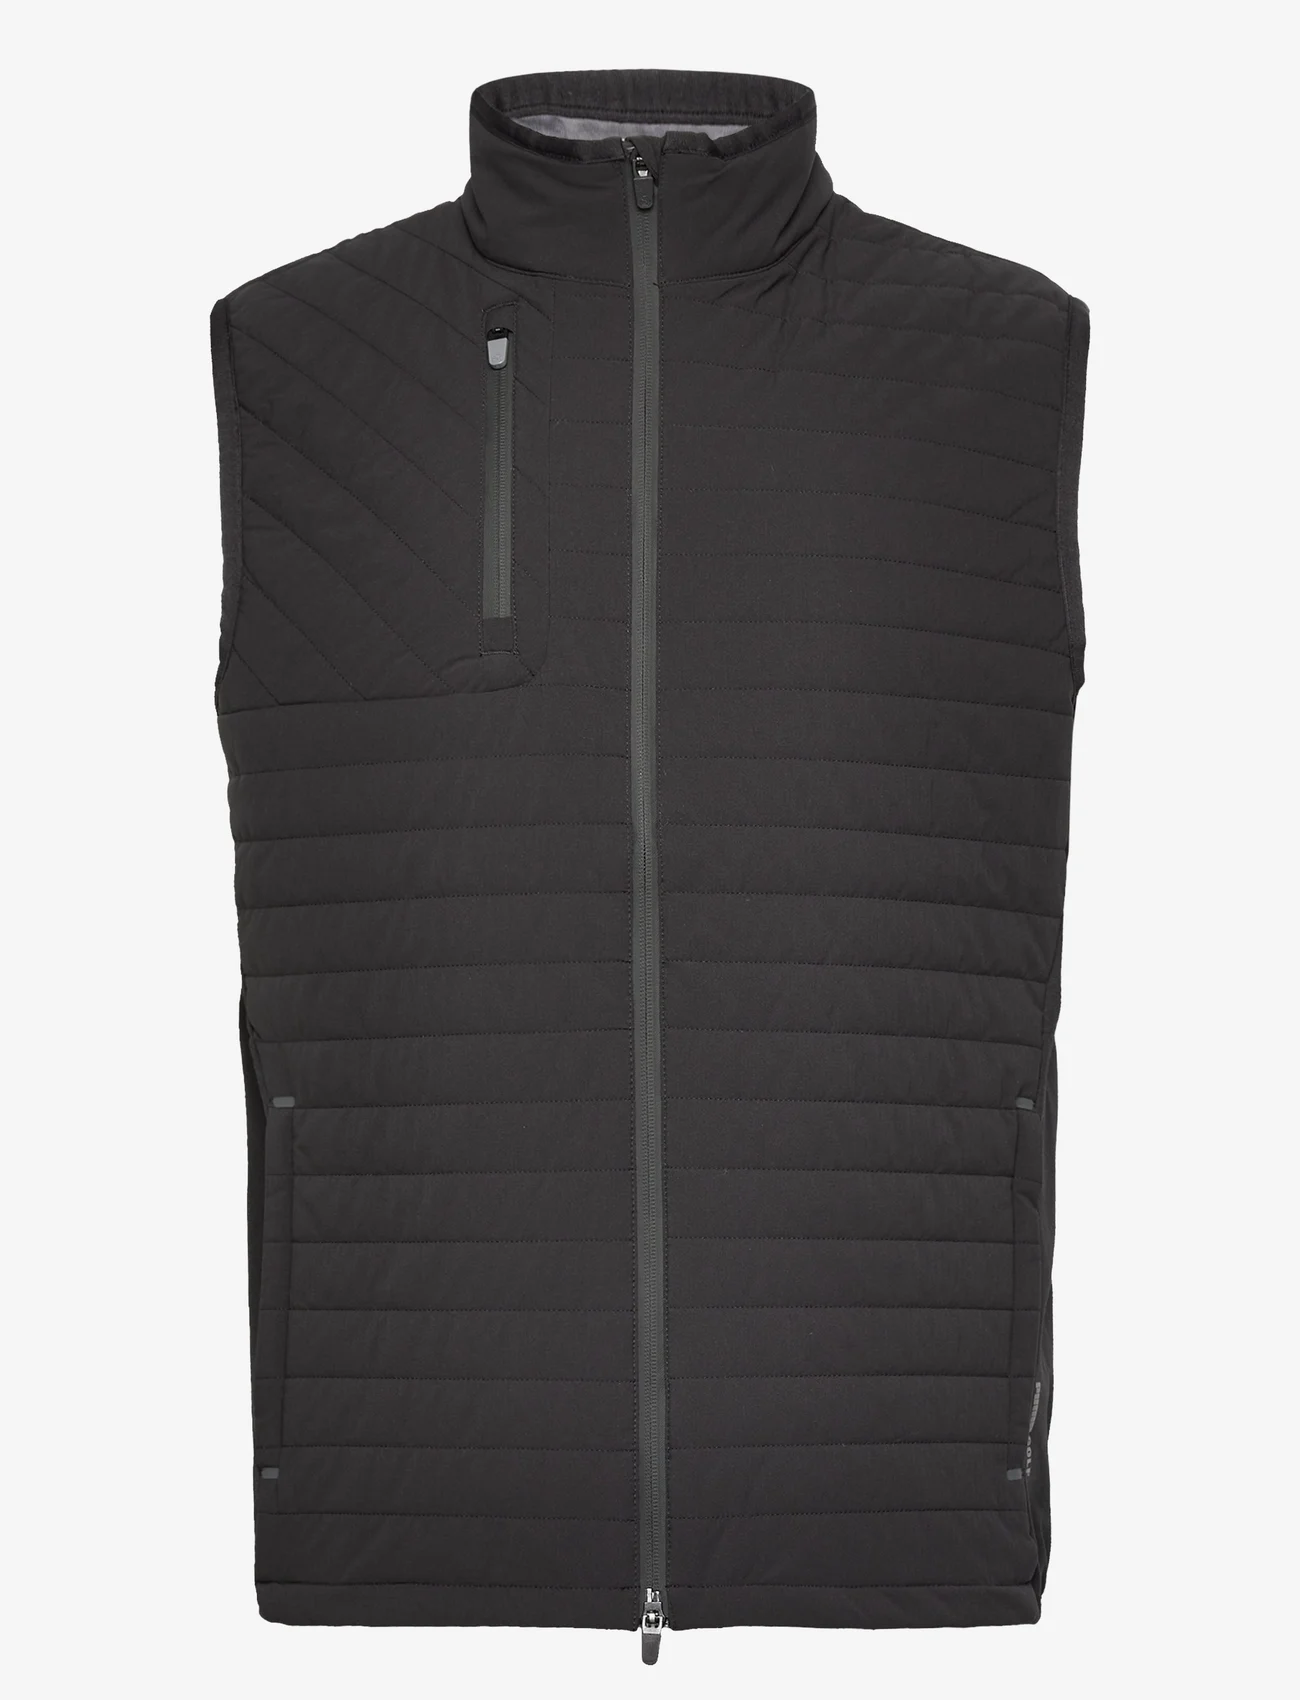 PUMA Golf - Scotia Quilted Vest - golf jackets - puma black-slate sky - 0